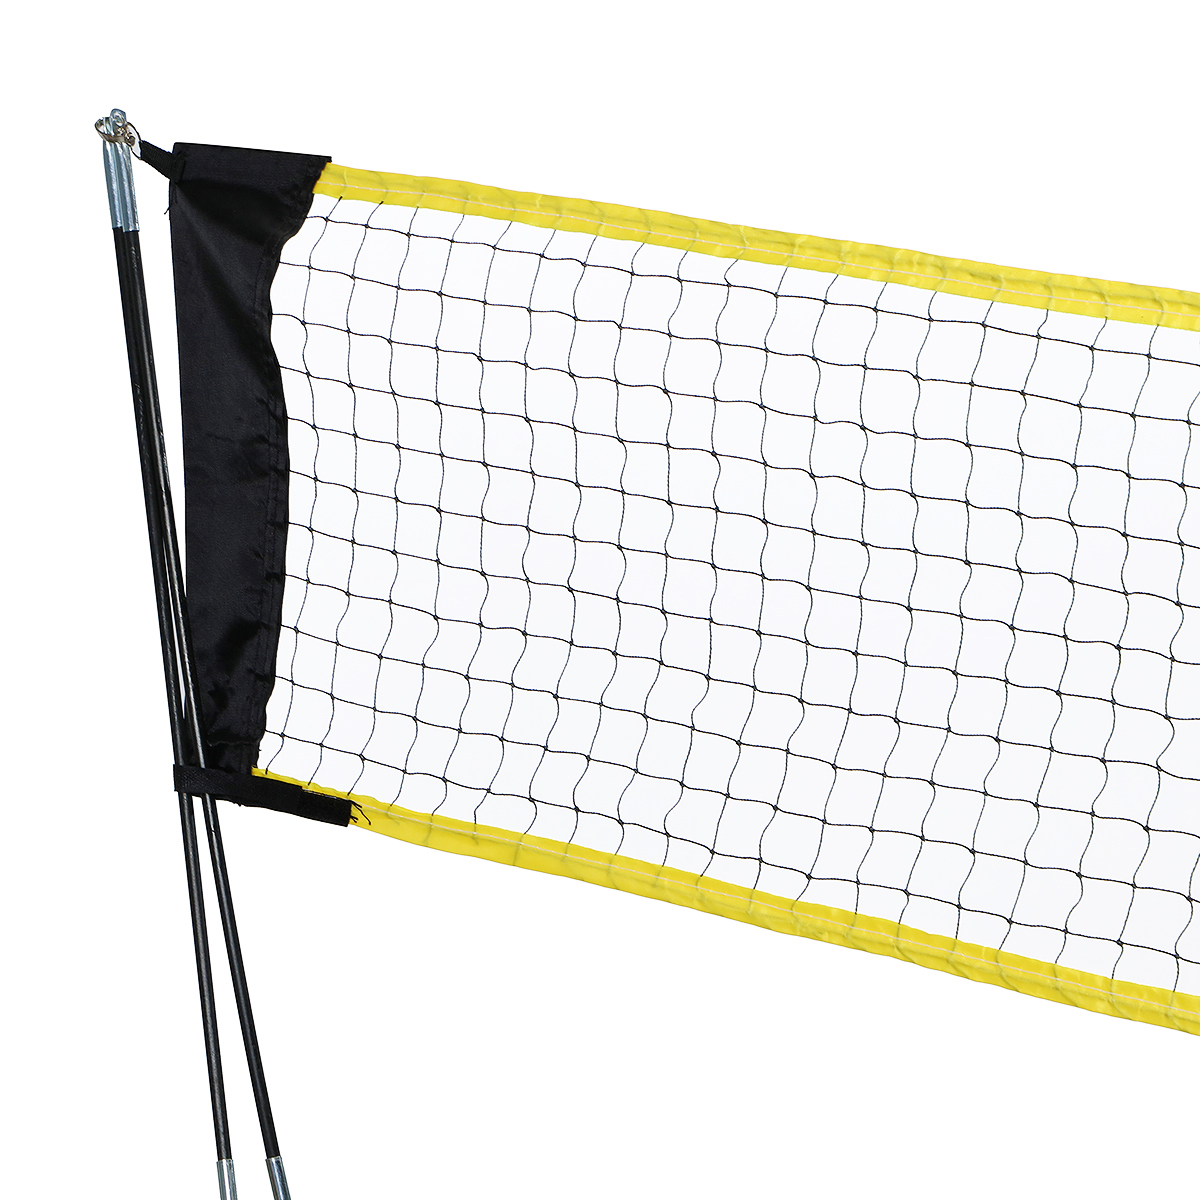 300x150CM-Standard-Outdoor-Badminton-Tennis-Net-Replacement-Badminton-Net-Professional-Training-Spor-1724984-7